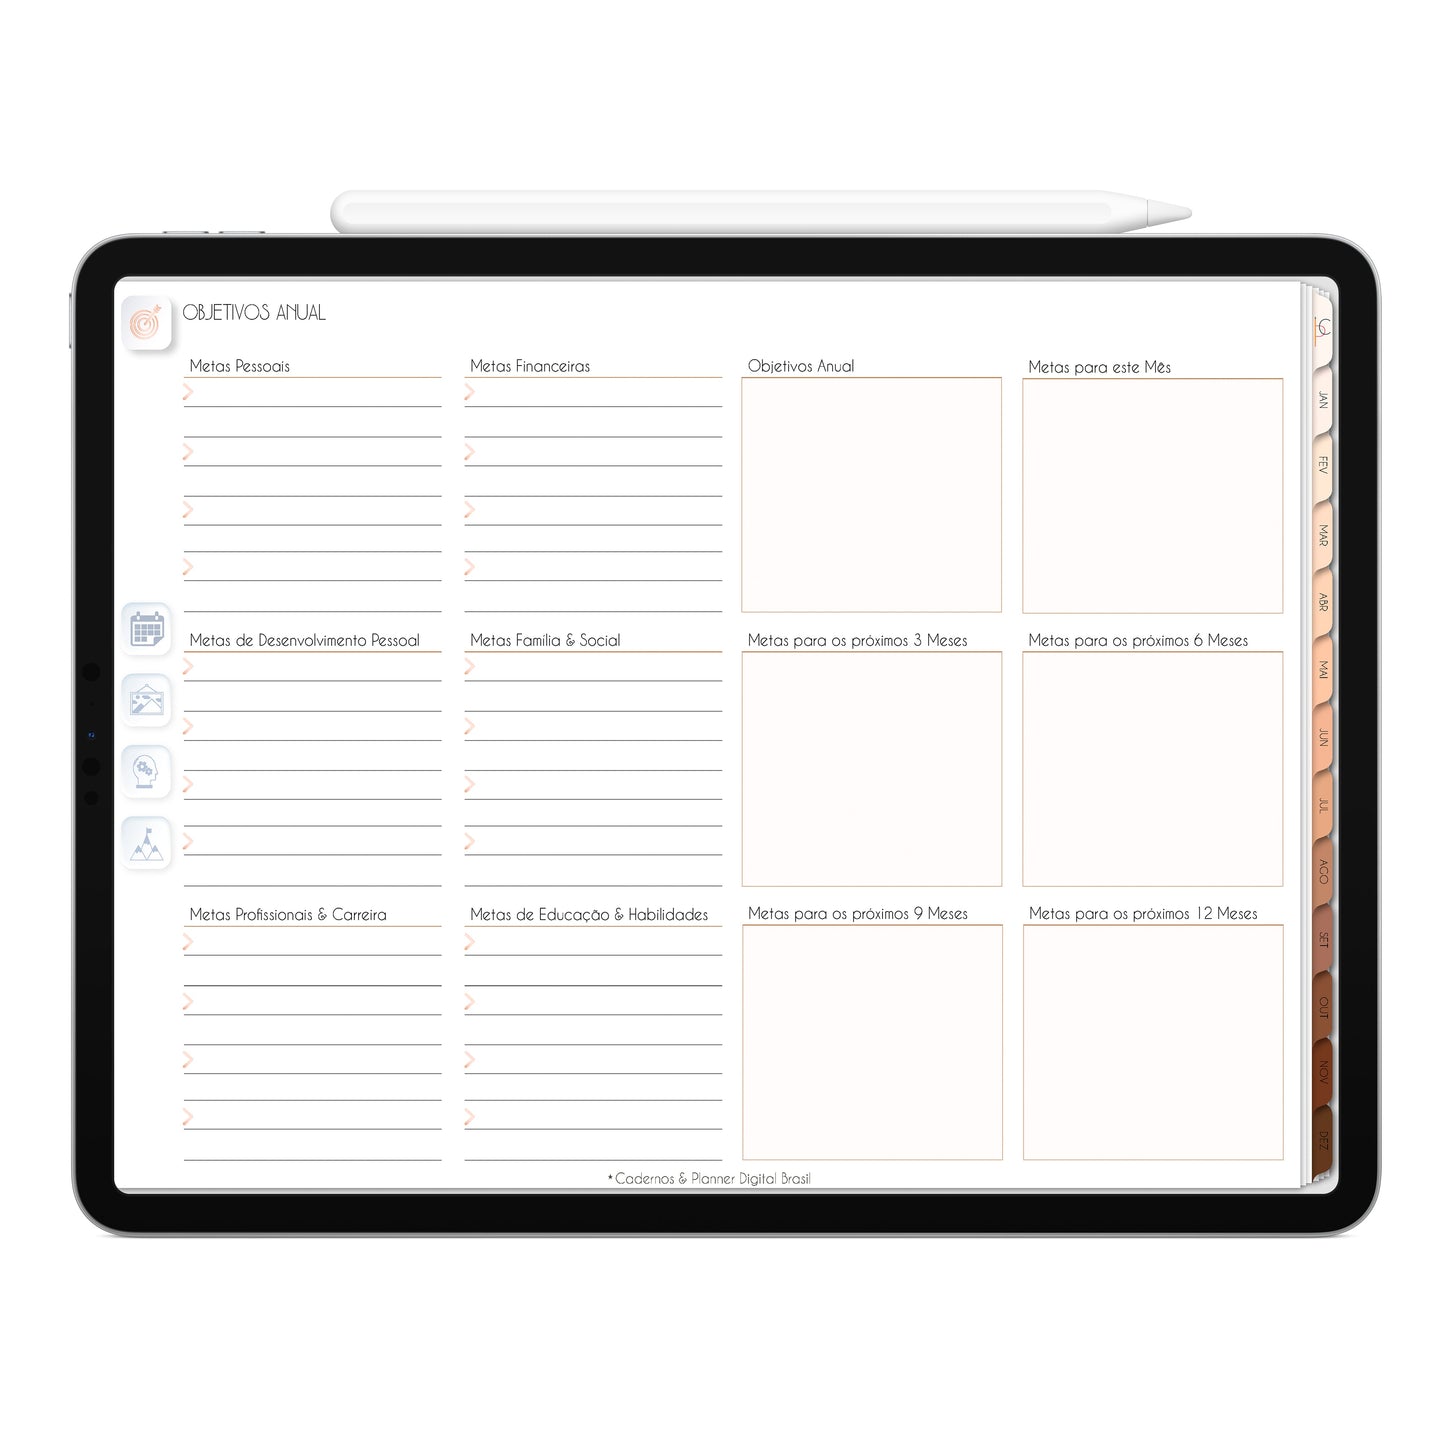 Planner Digital 2023 Horizontal Minimal Universe I • iPad Tablet • Download Instantâneo • Sustentável